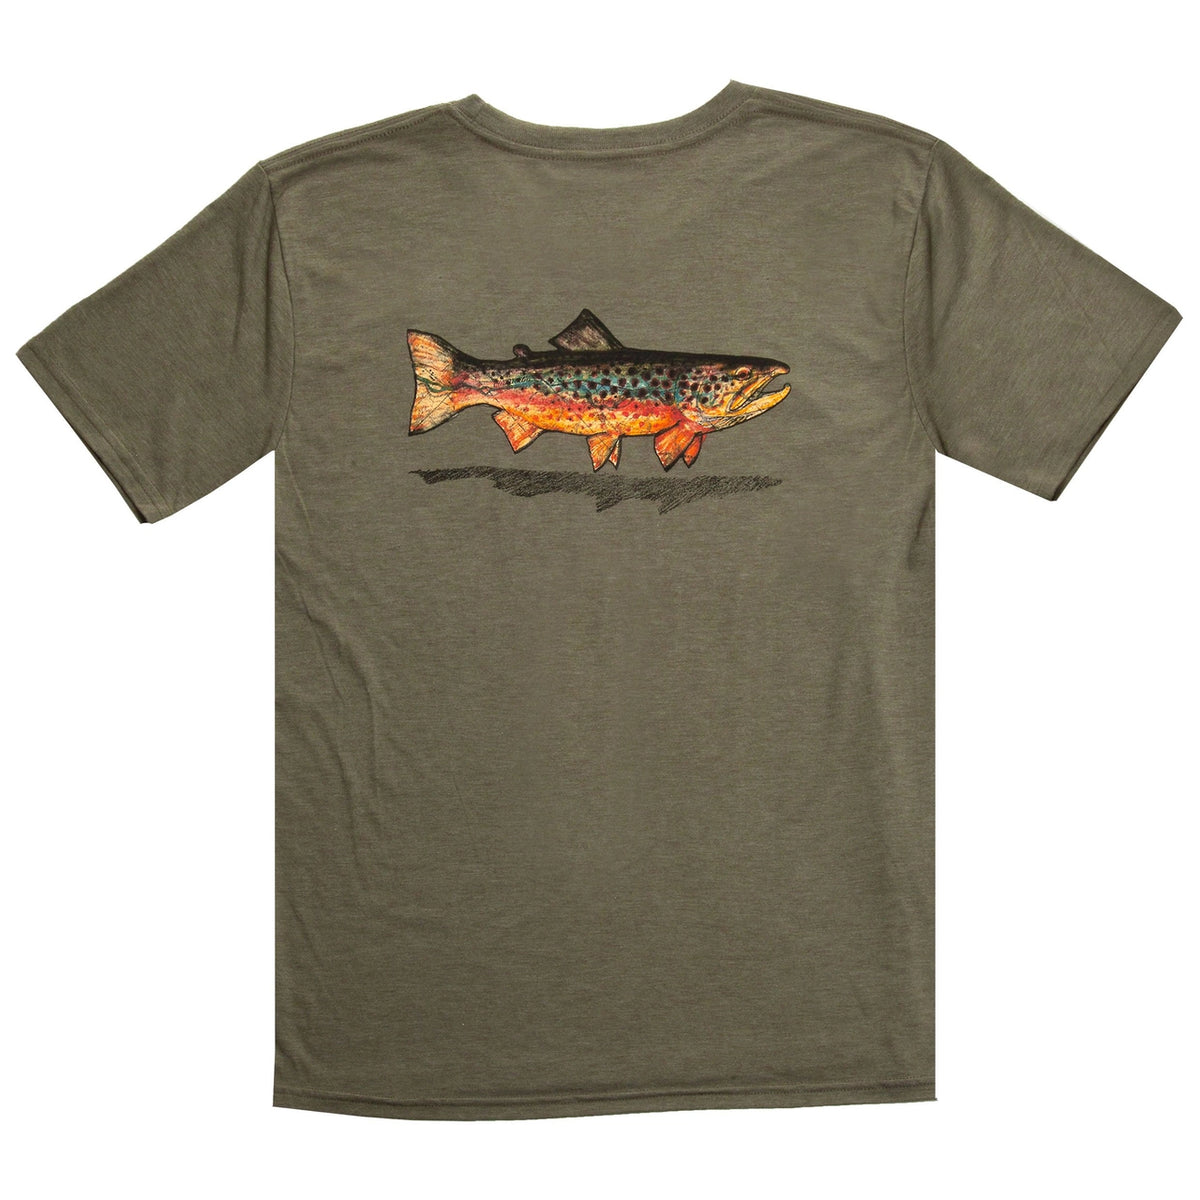 Fishpond - Local Shirt - Olive